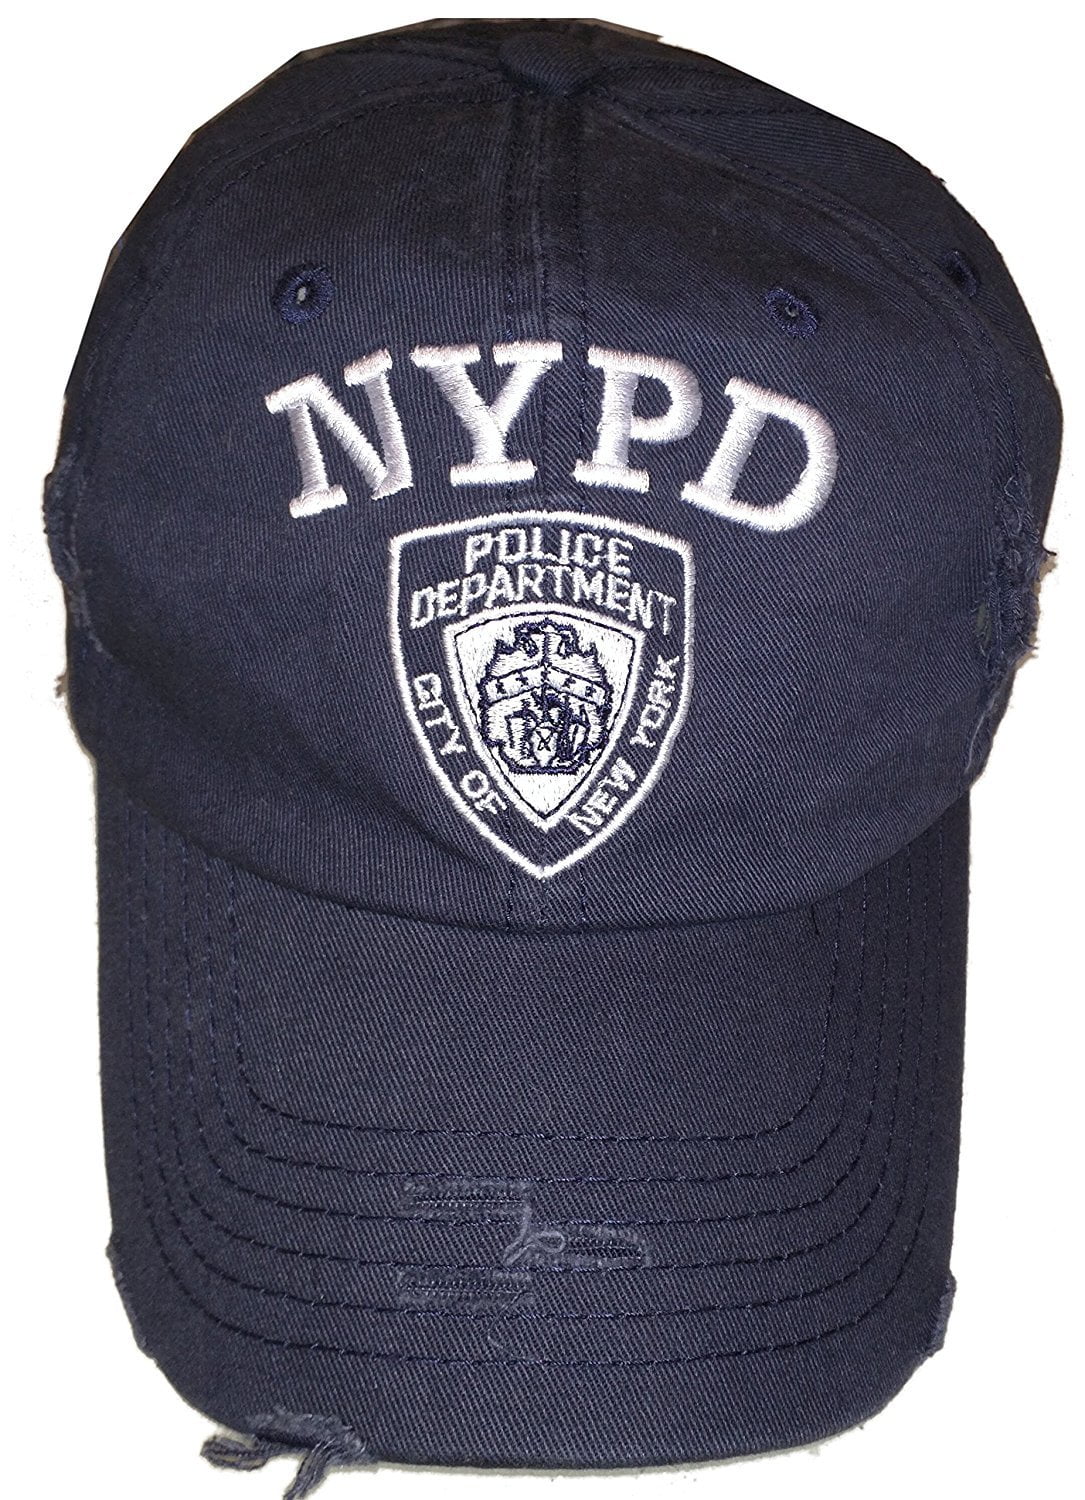 NYPD BASEBALL HAT BALL CAP NAVY NEW YORK POLICE DEPARTMENT BADGE NYC COPS MENS 